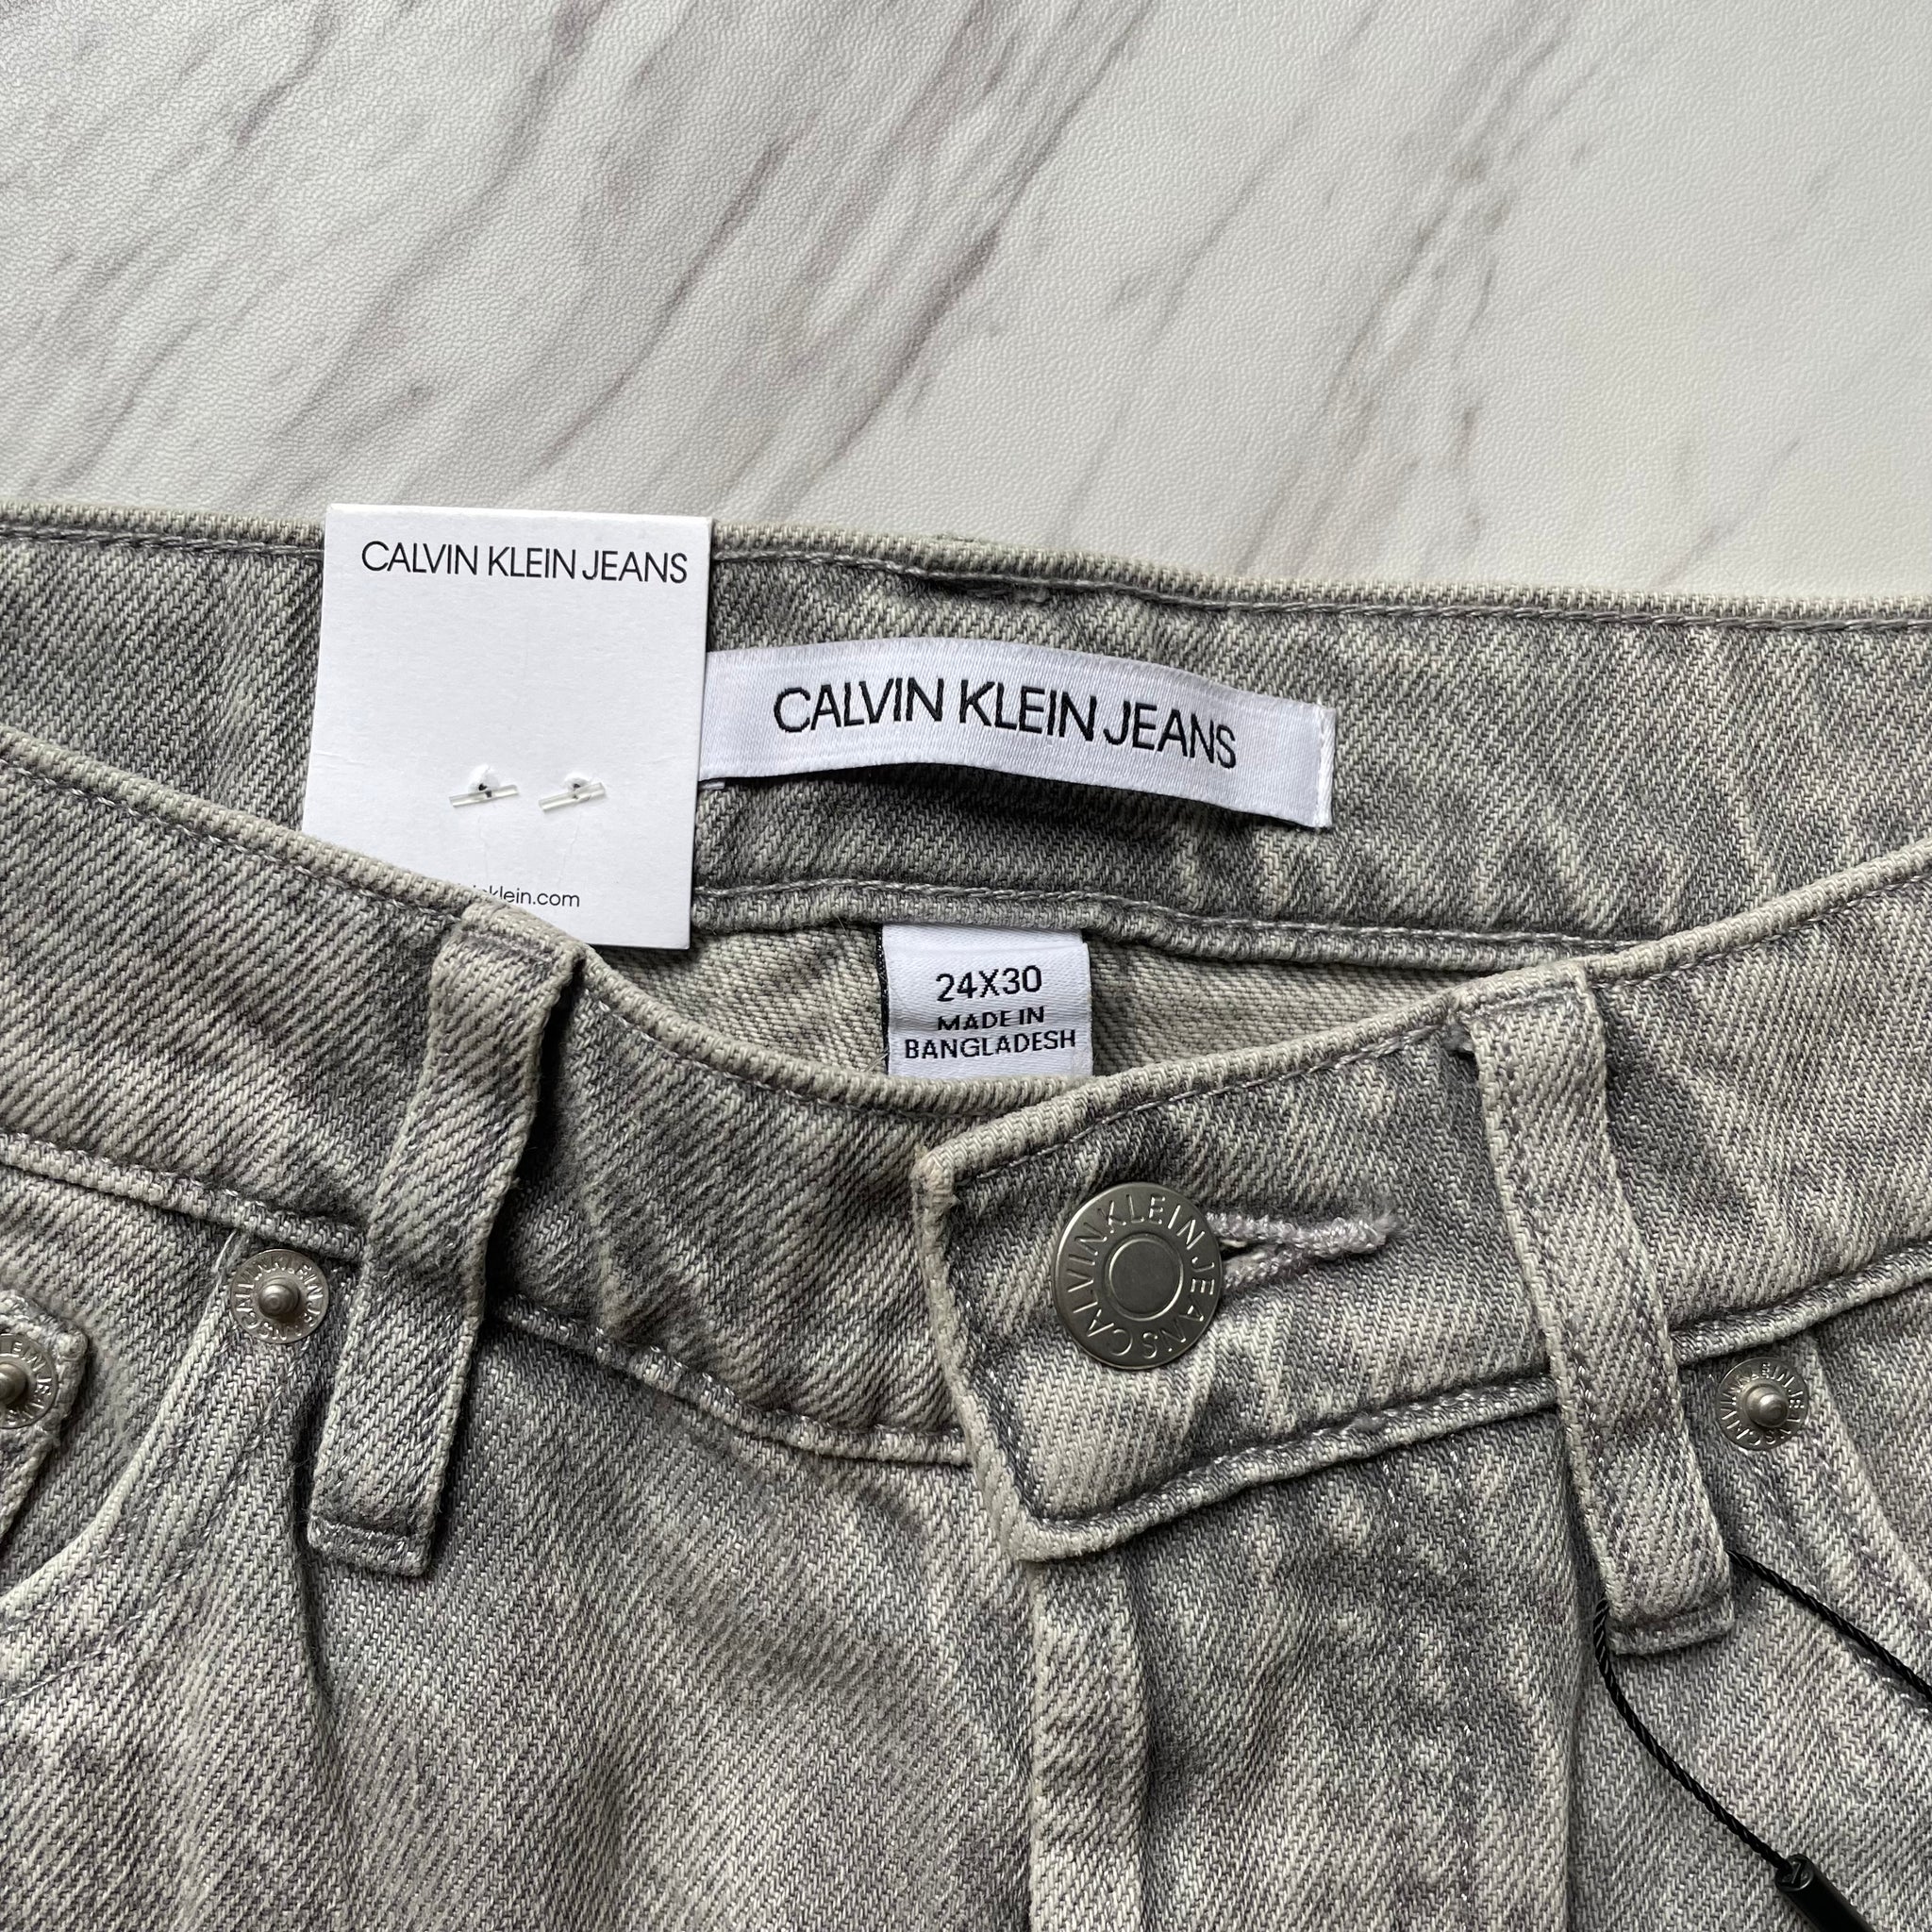 New Calvin Klein jeans, Size 24